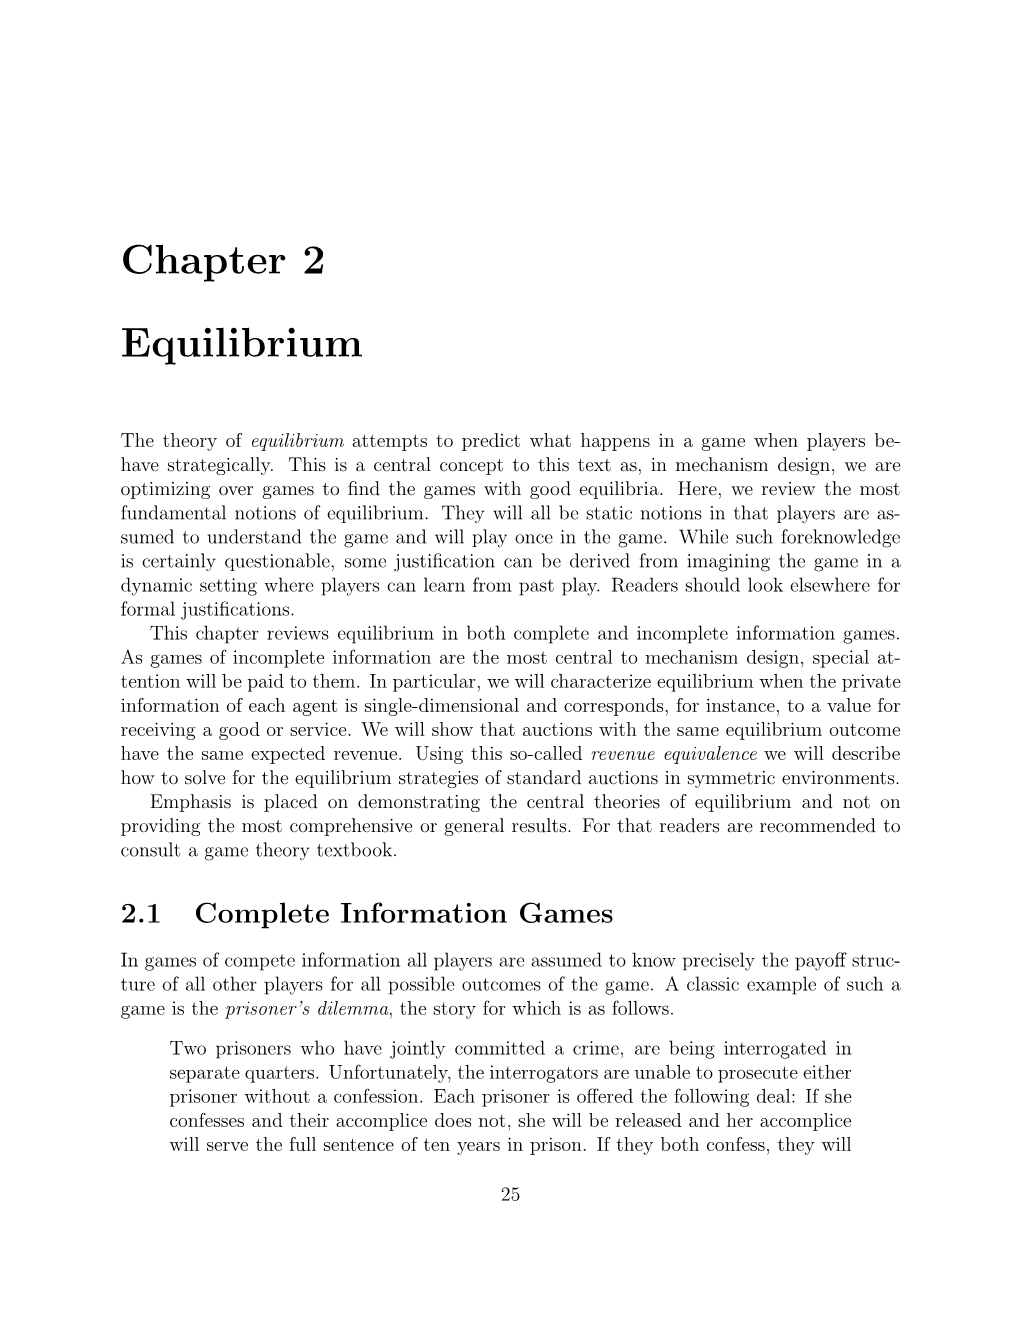 Chapter 2 Equilibrium